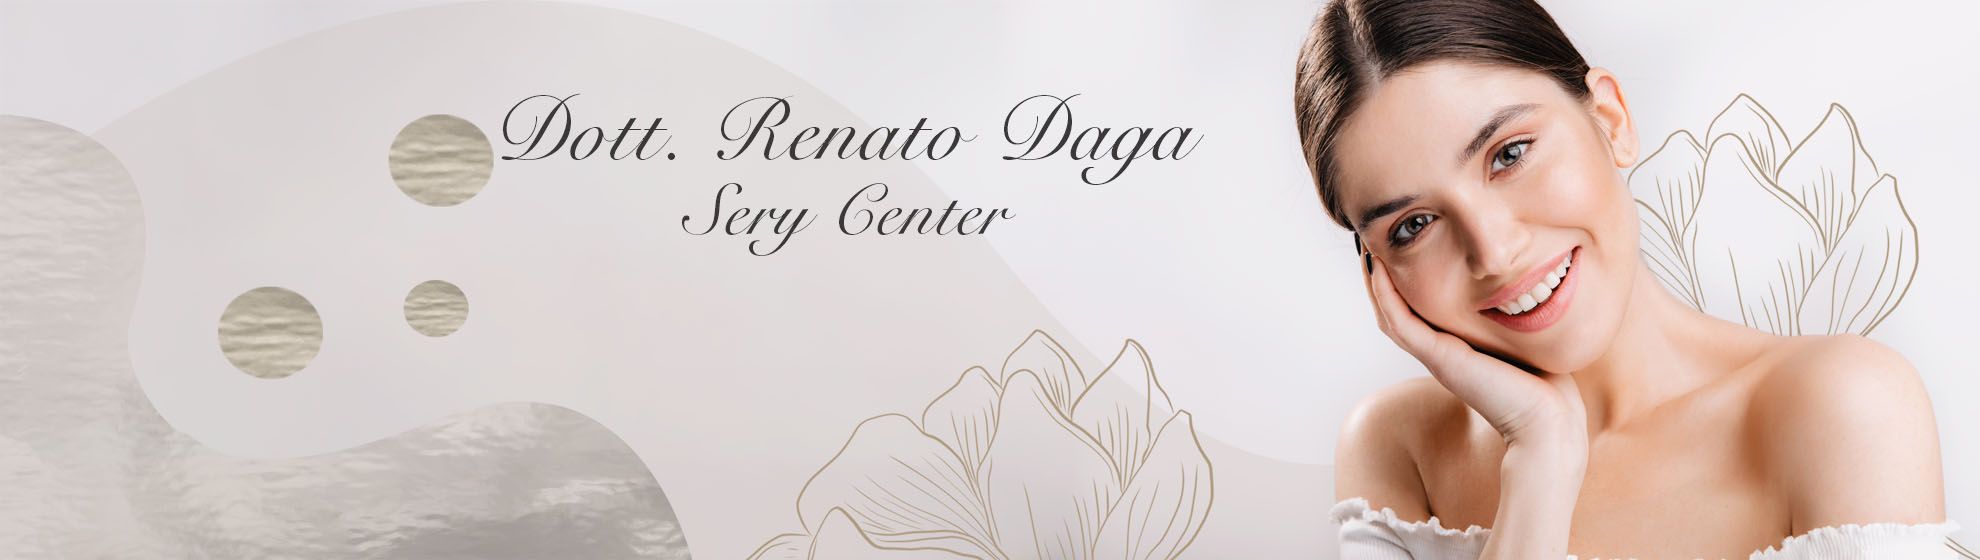 Dott. Renato Daga - Sery Center